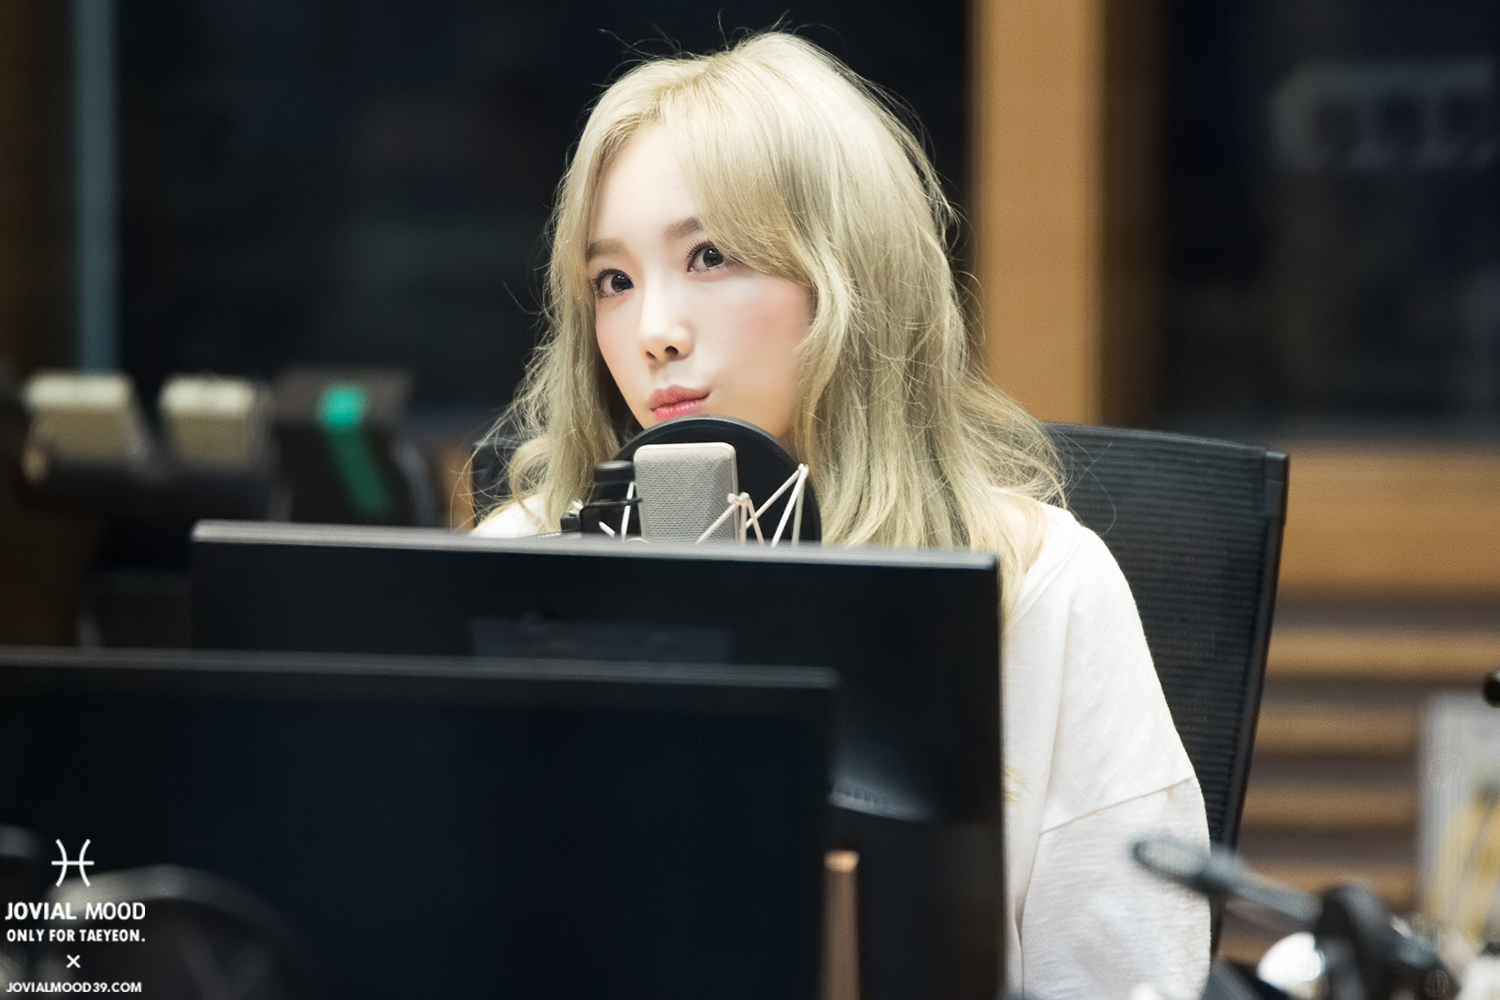 [OTHER][06-02-2015]Hình ảnh mới nhất từ DJ Sunny tại Radio MBC FM4U - "FM Date" - Page 32 28643327404_2e7109bbe1_o